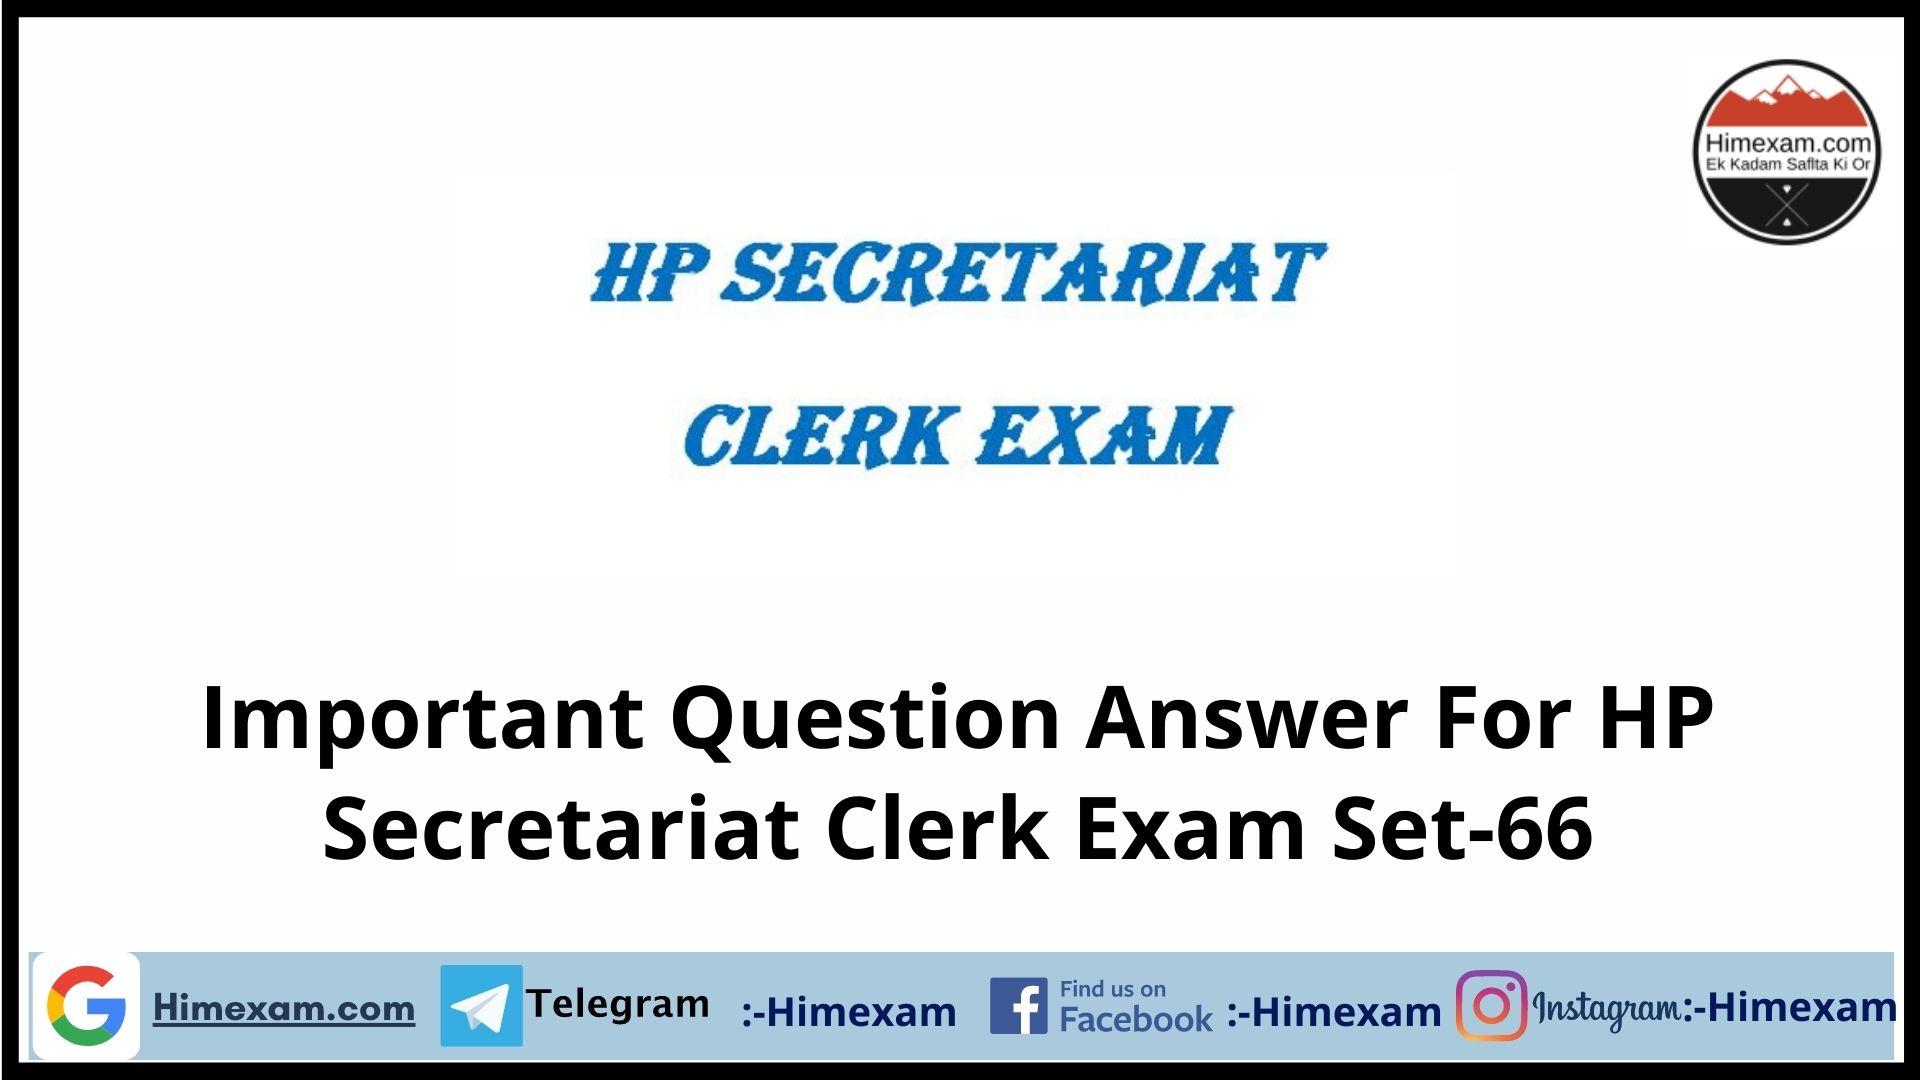 Important Question Answer For HP Secretariat Clerk Exam Set-66